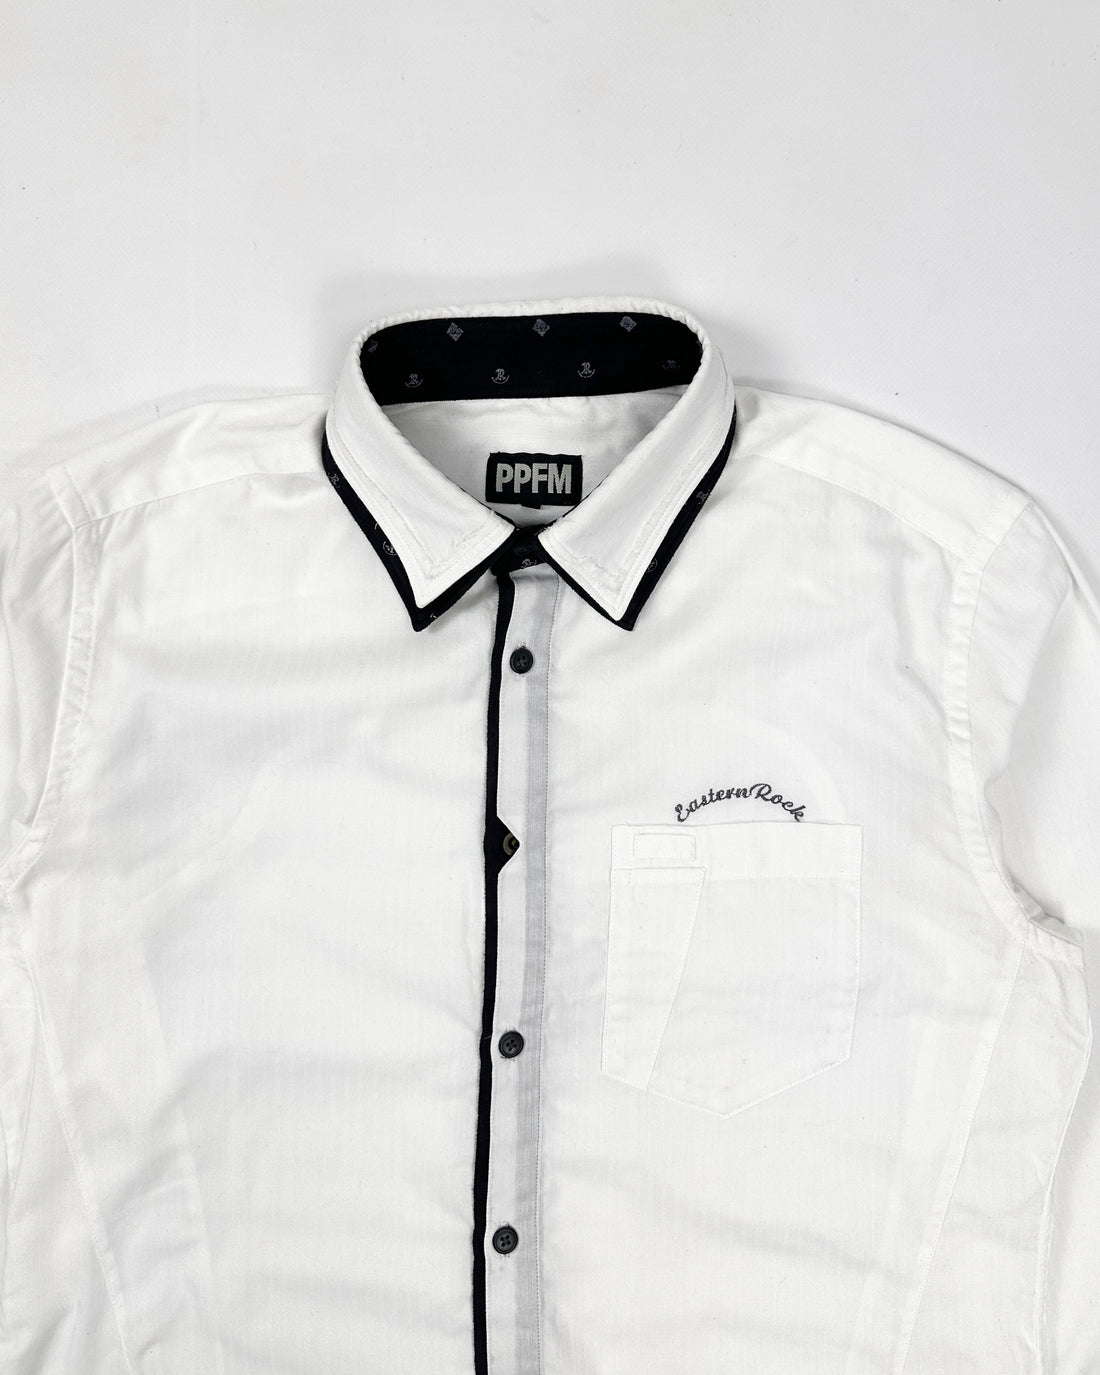 PPFM "Eastern Rock" 2-Layer White Shirt 2000's